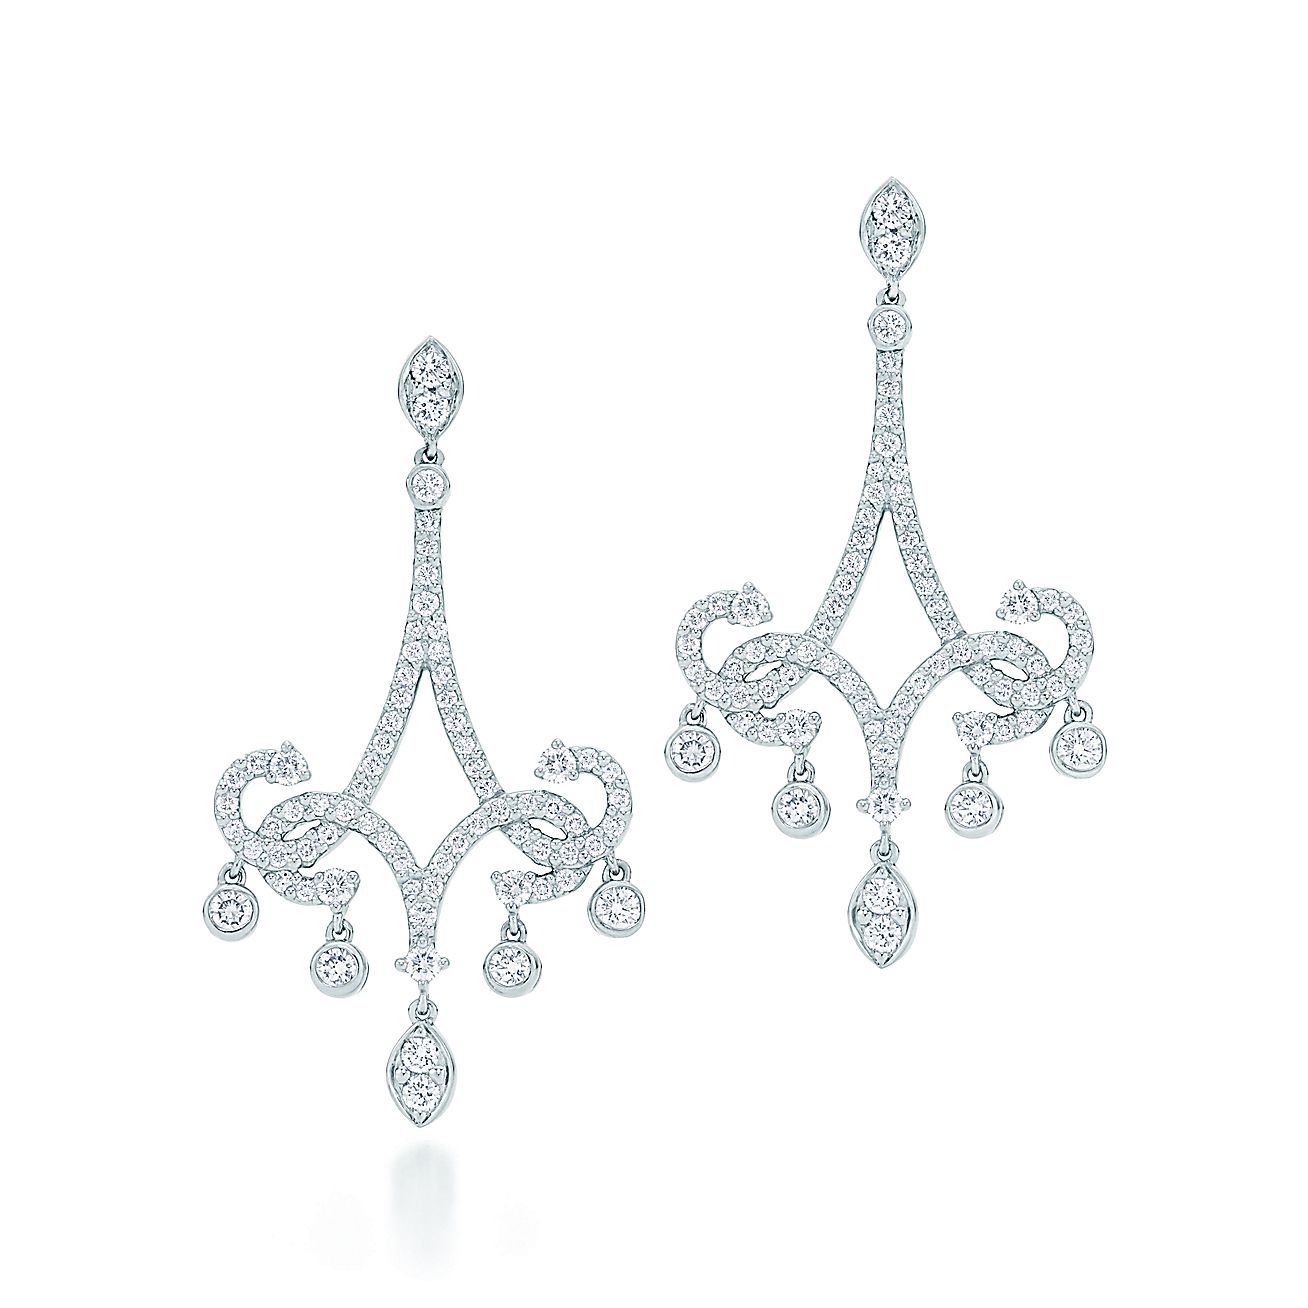 Tiffany Enchant® scroll earrings in platinum with diamonds. | Tiffany & Co.